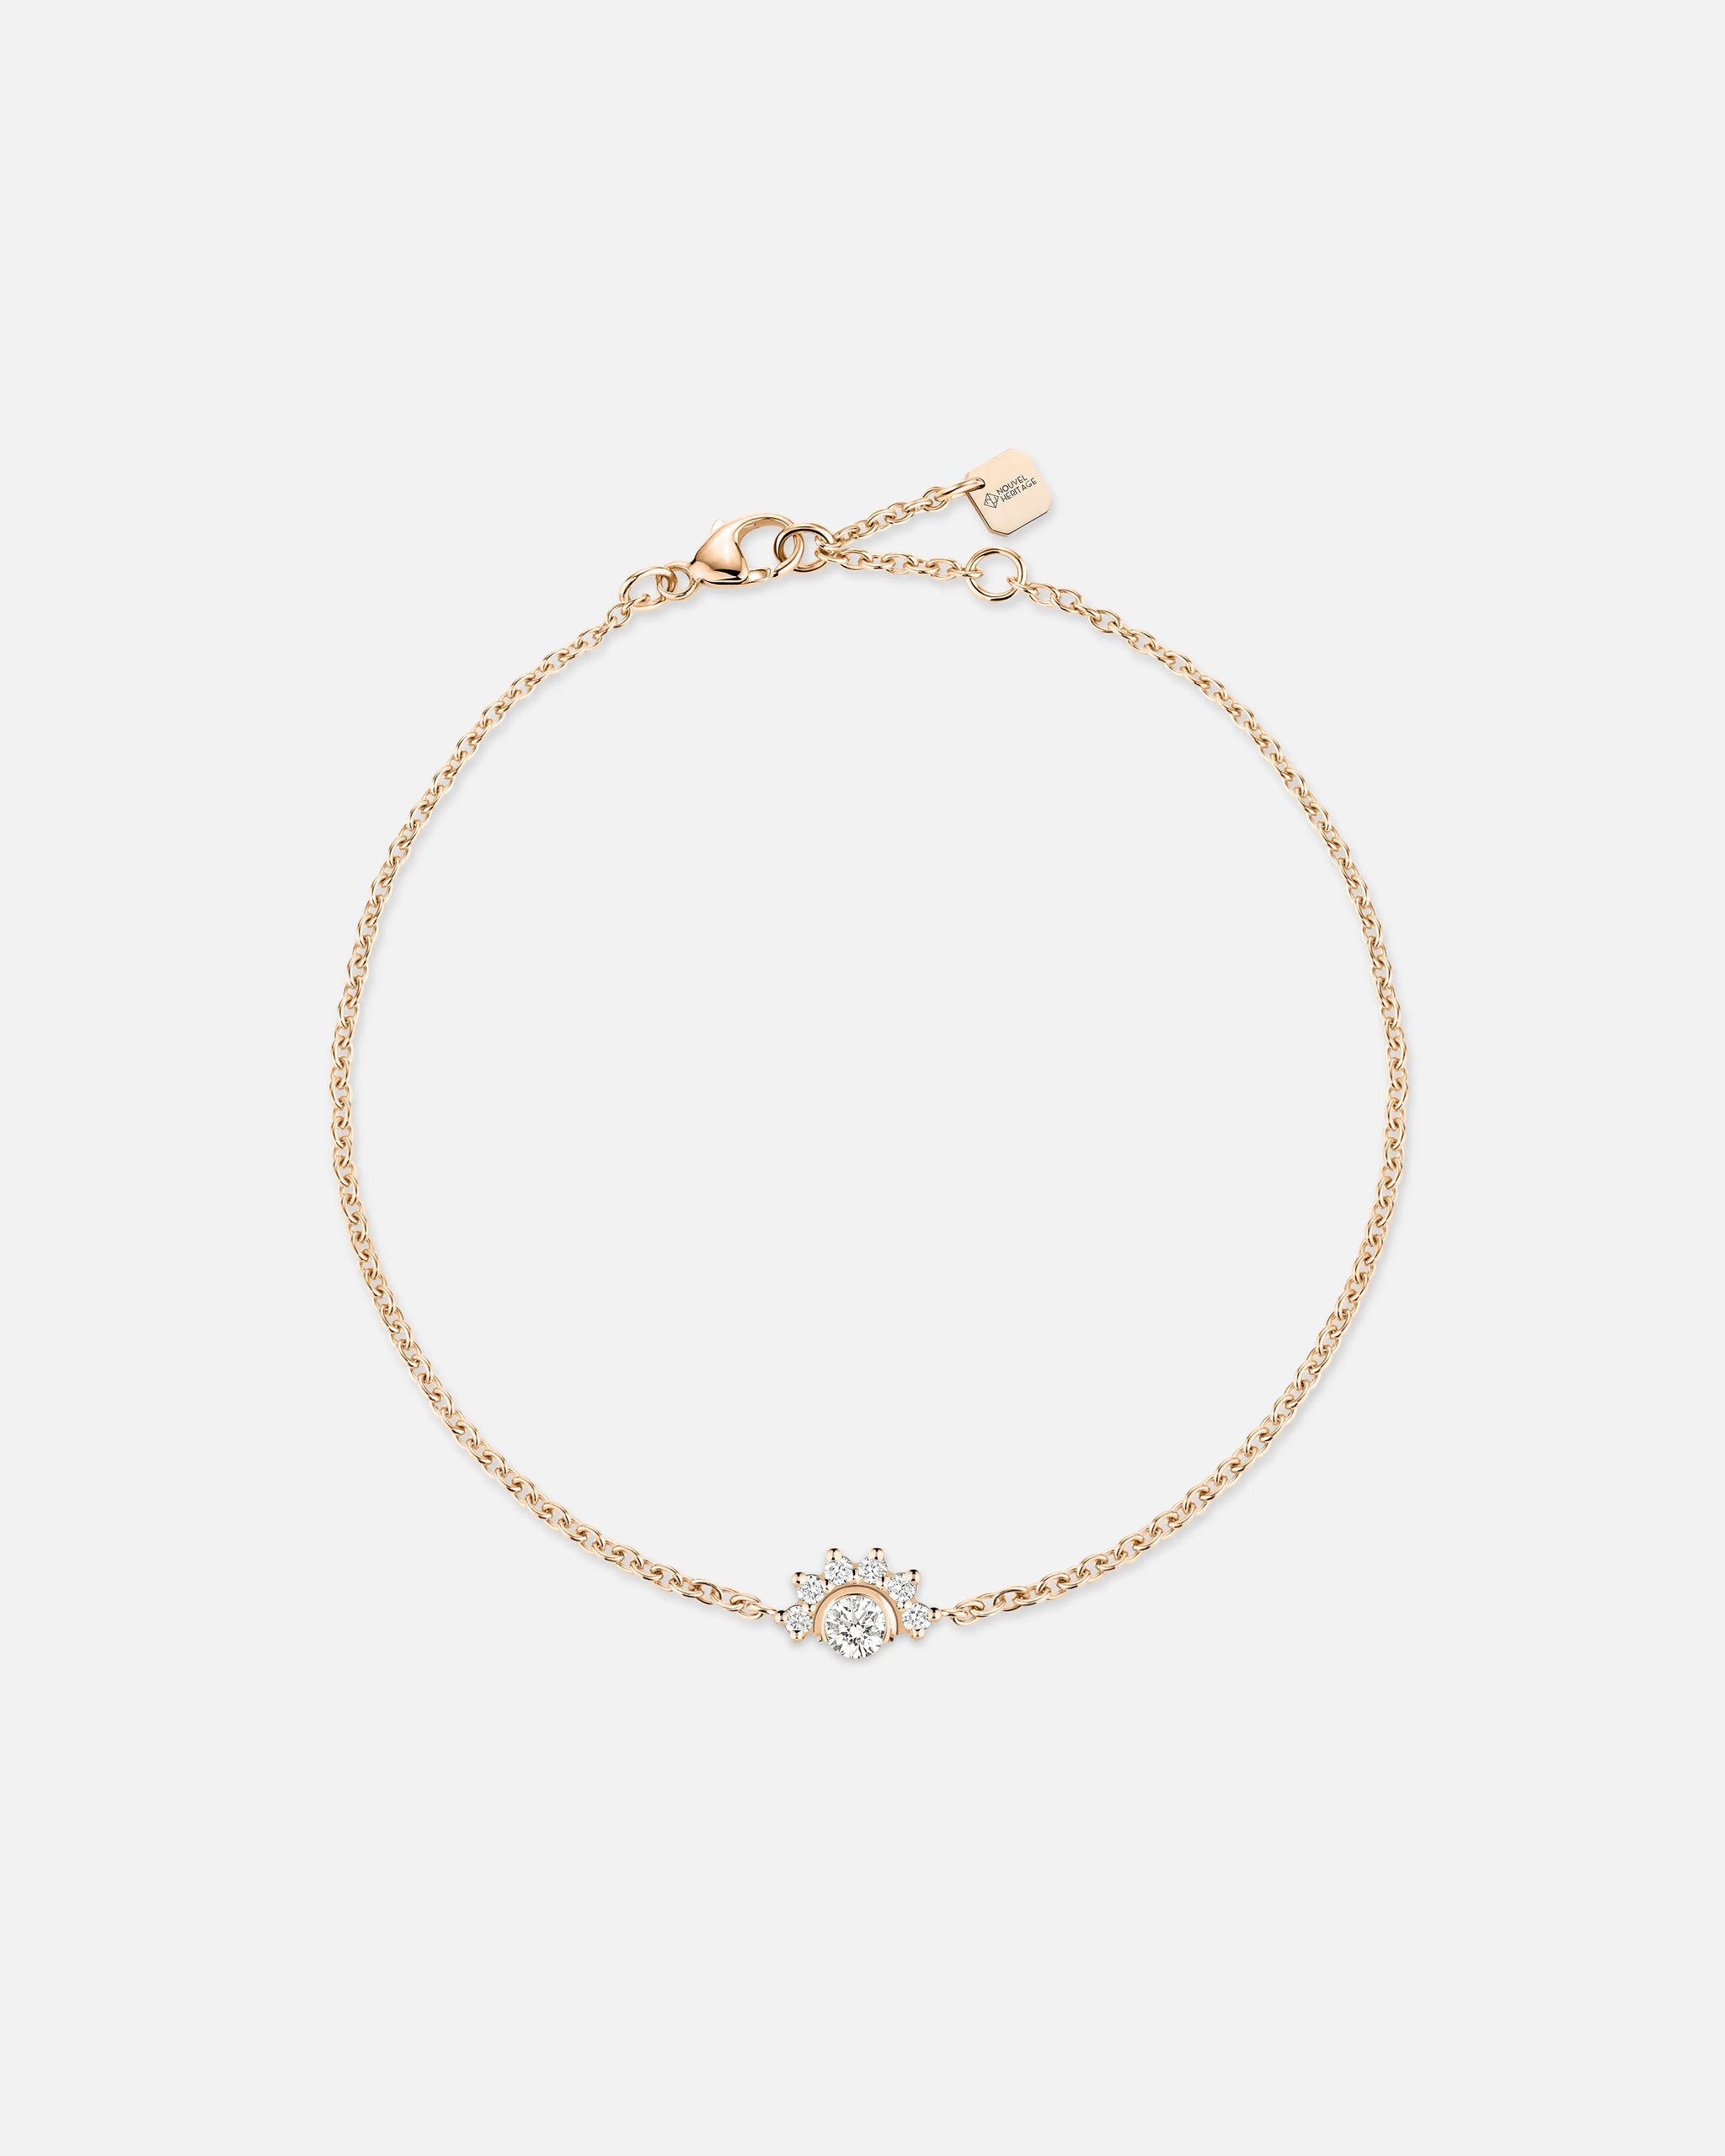 Mystic Diamond Bracelet in Rose Gold - 1 - Nouvel Heritage